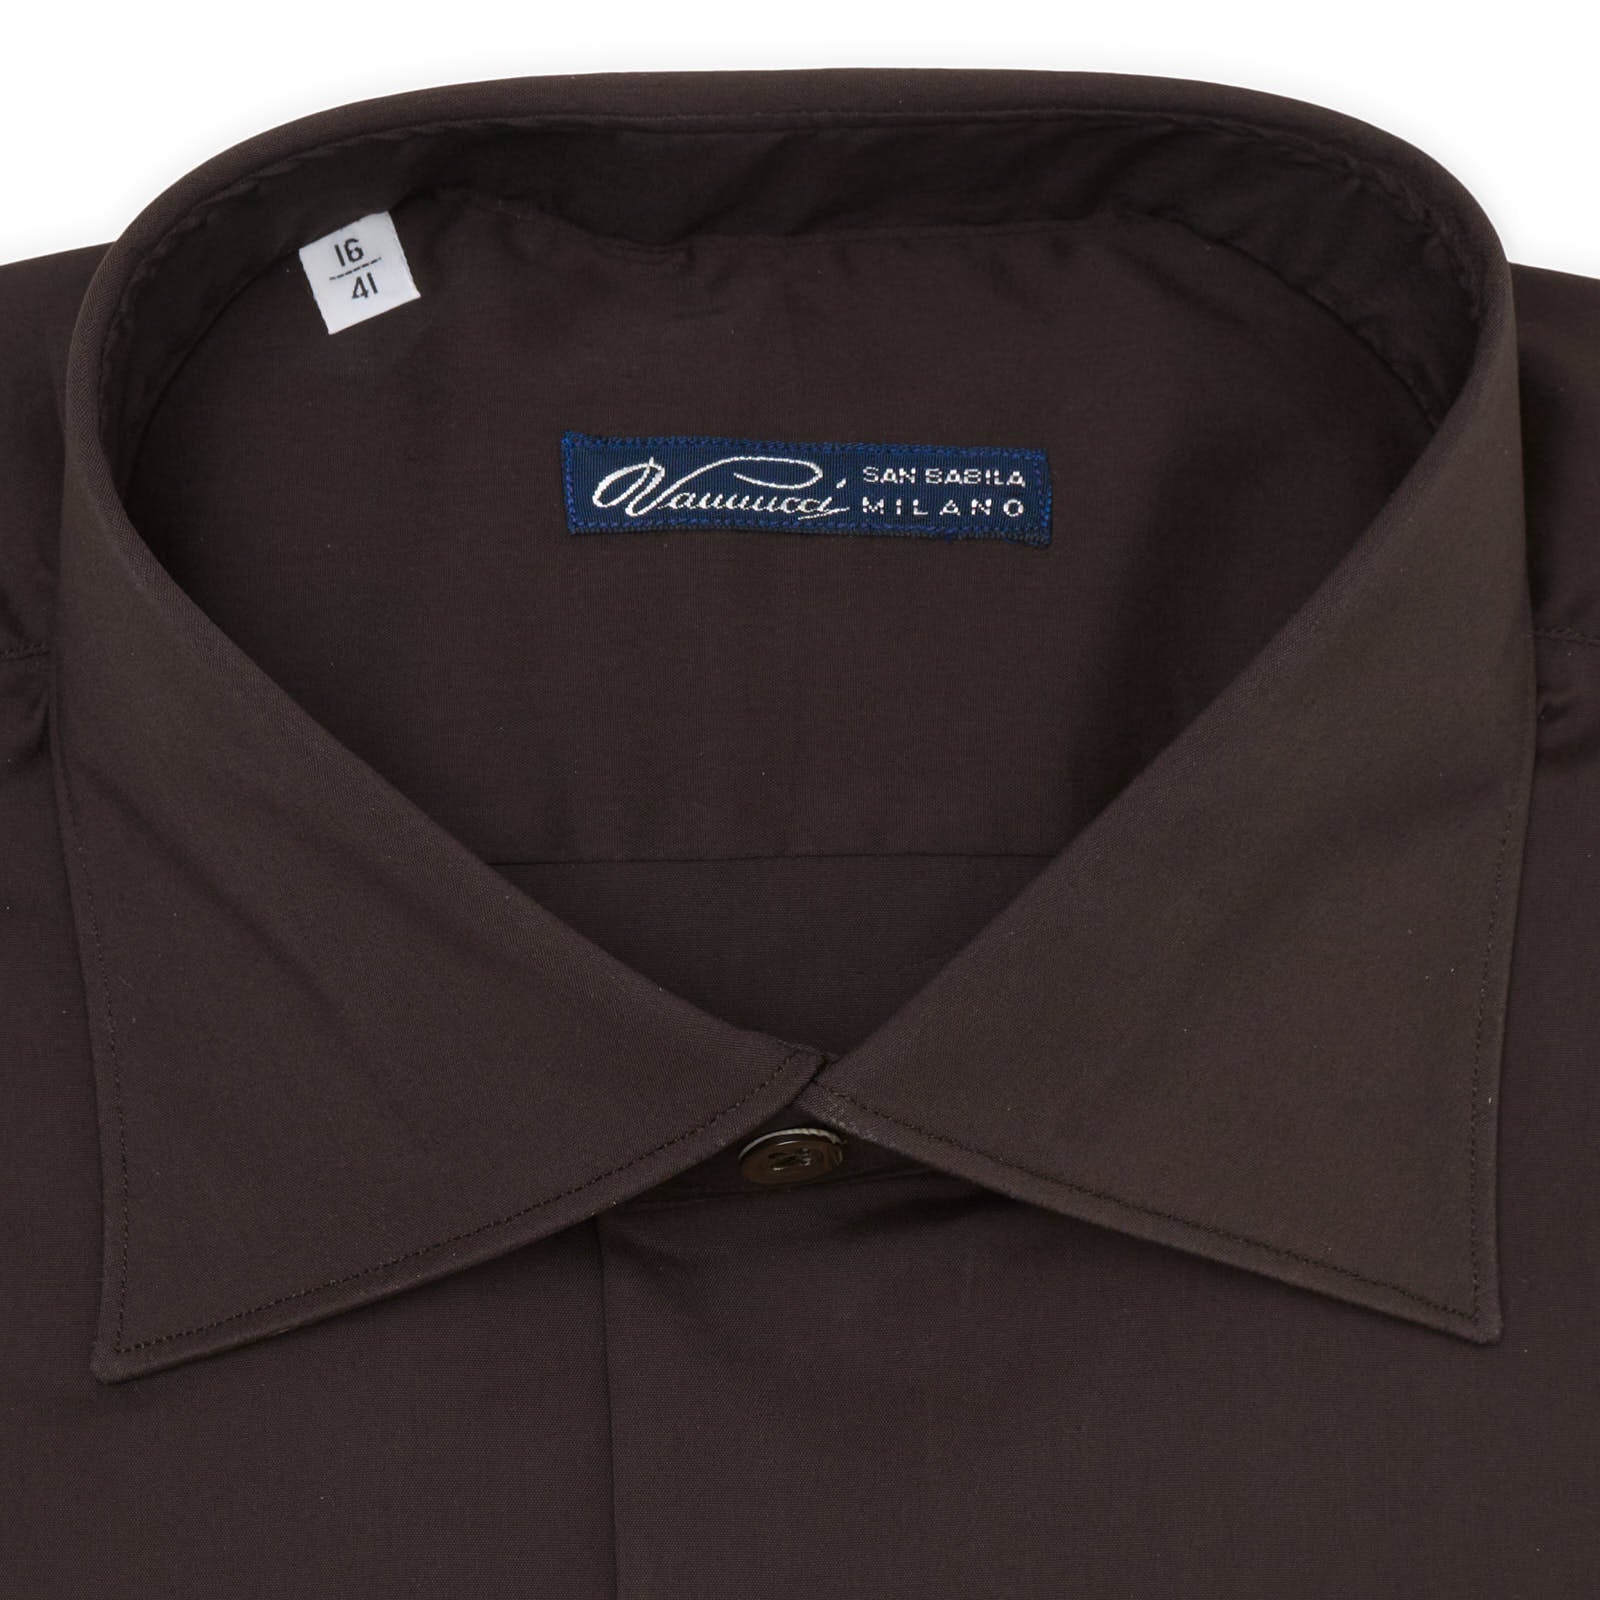 VANNUCCI Milano Brown Cotton Stretch Fabric Dress Shirt NEW